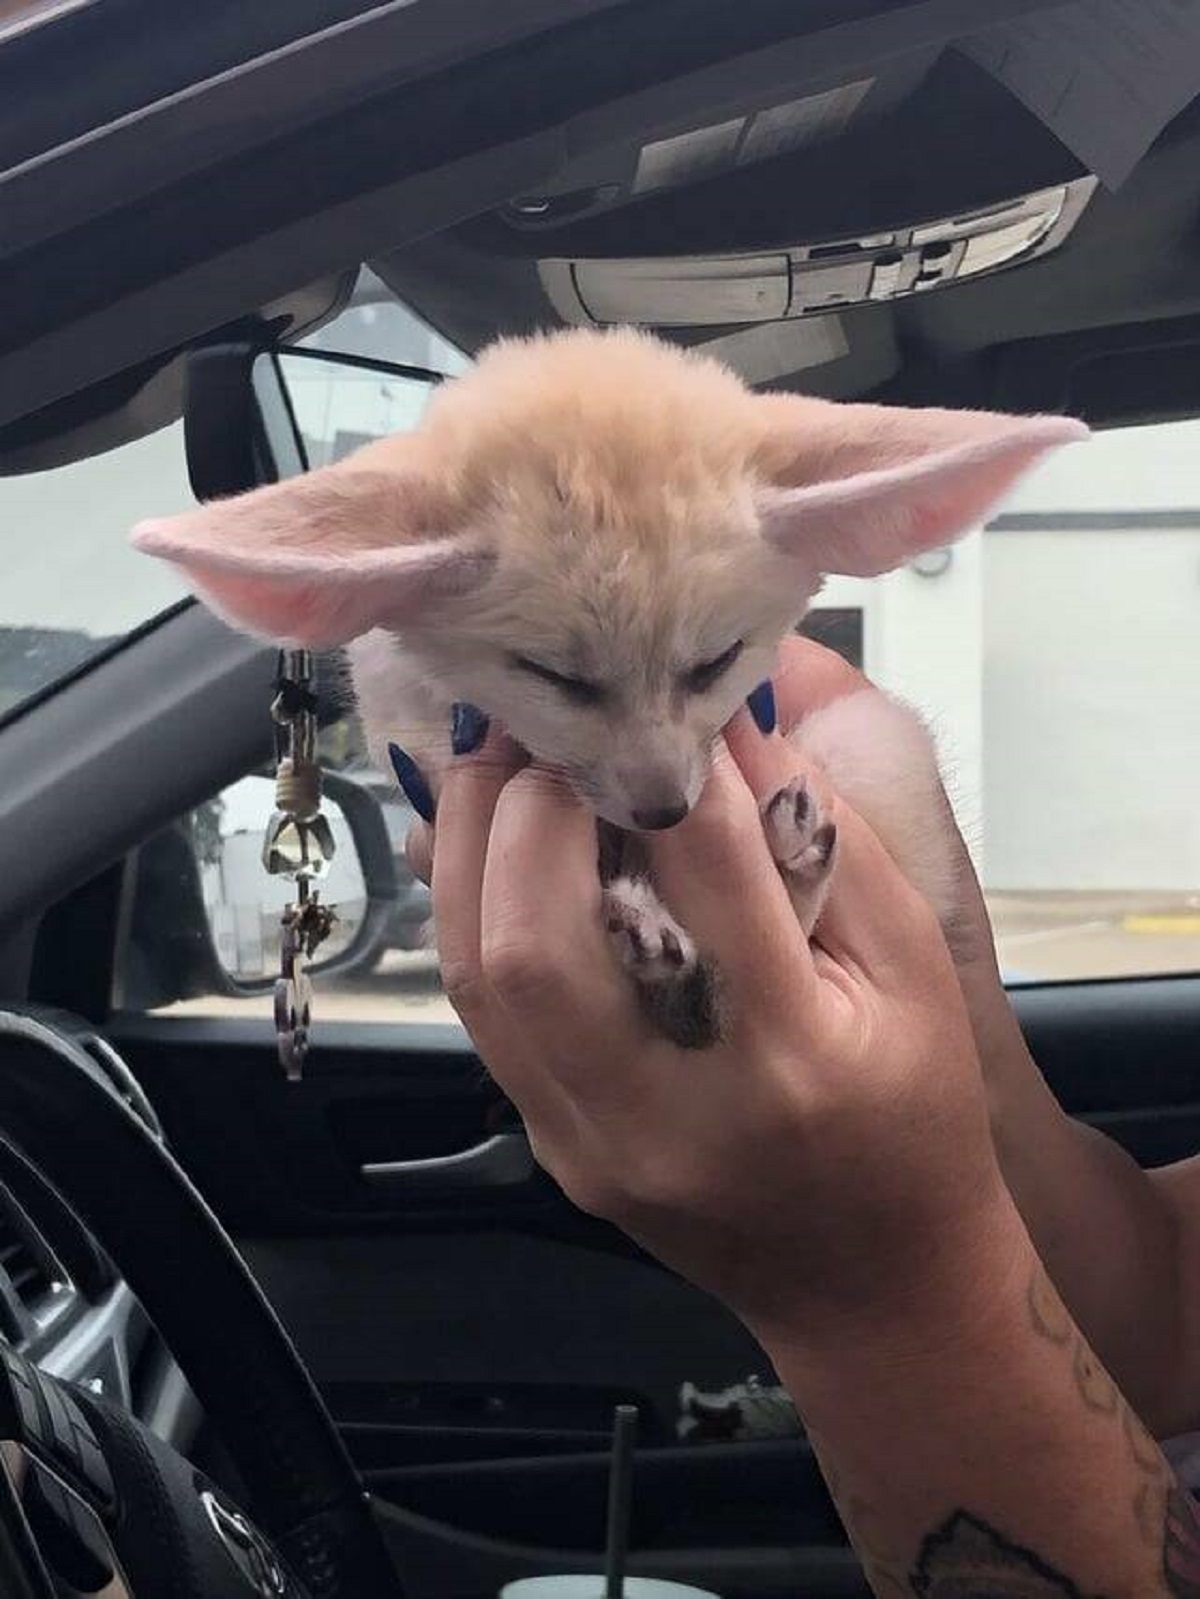 "Customer in drive thru had a baby fox."